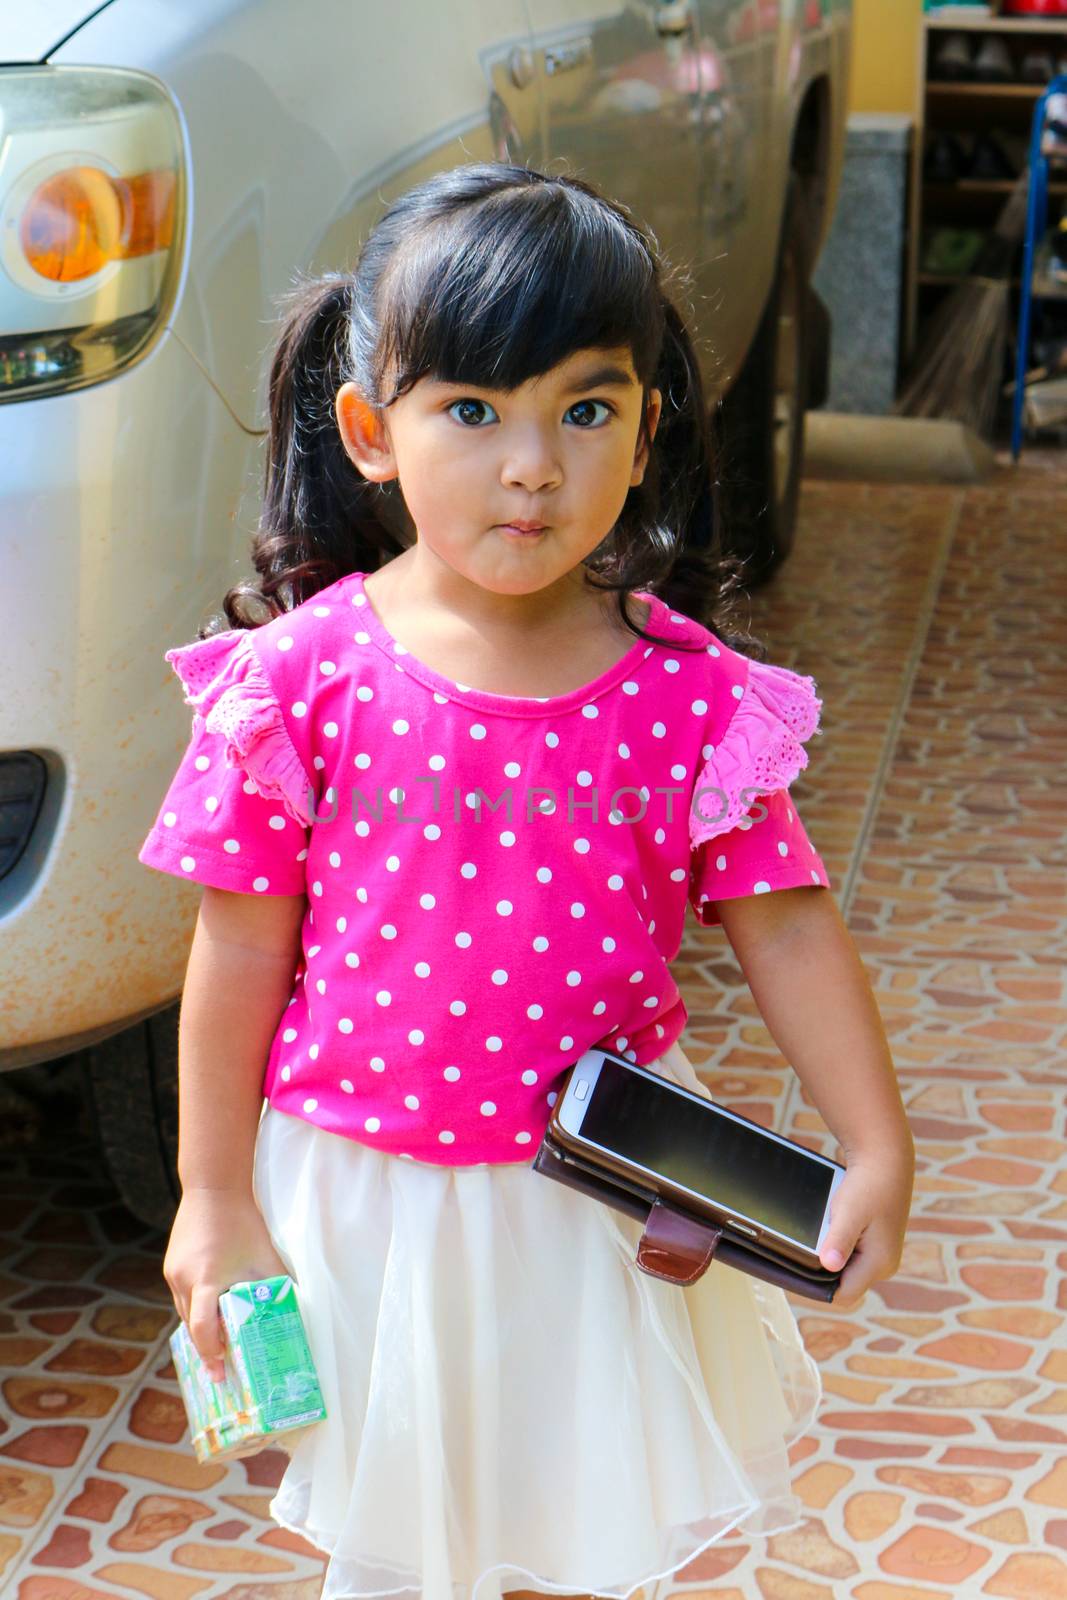 Pretty girl holding a telephone handset